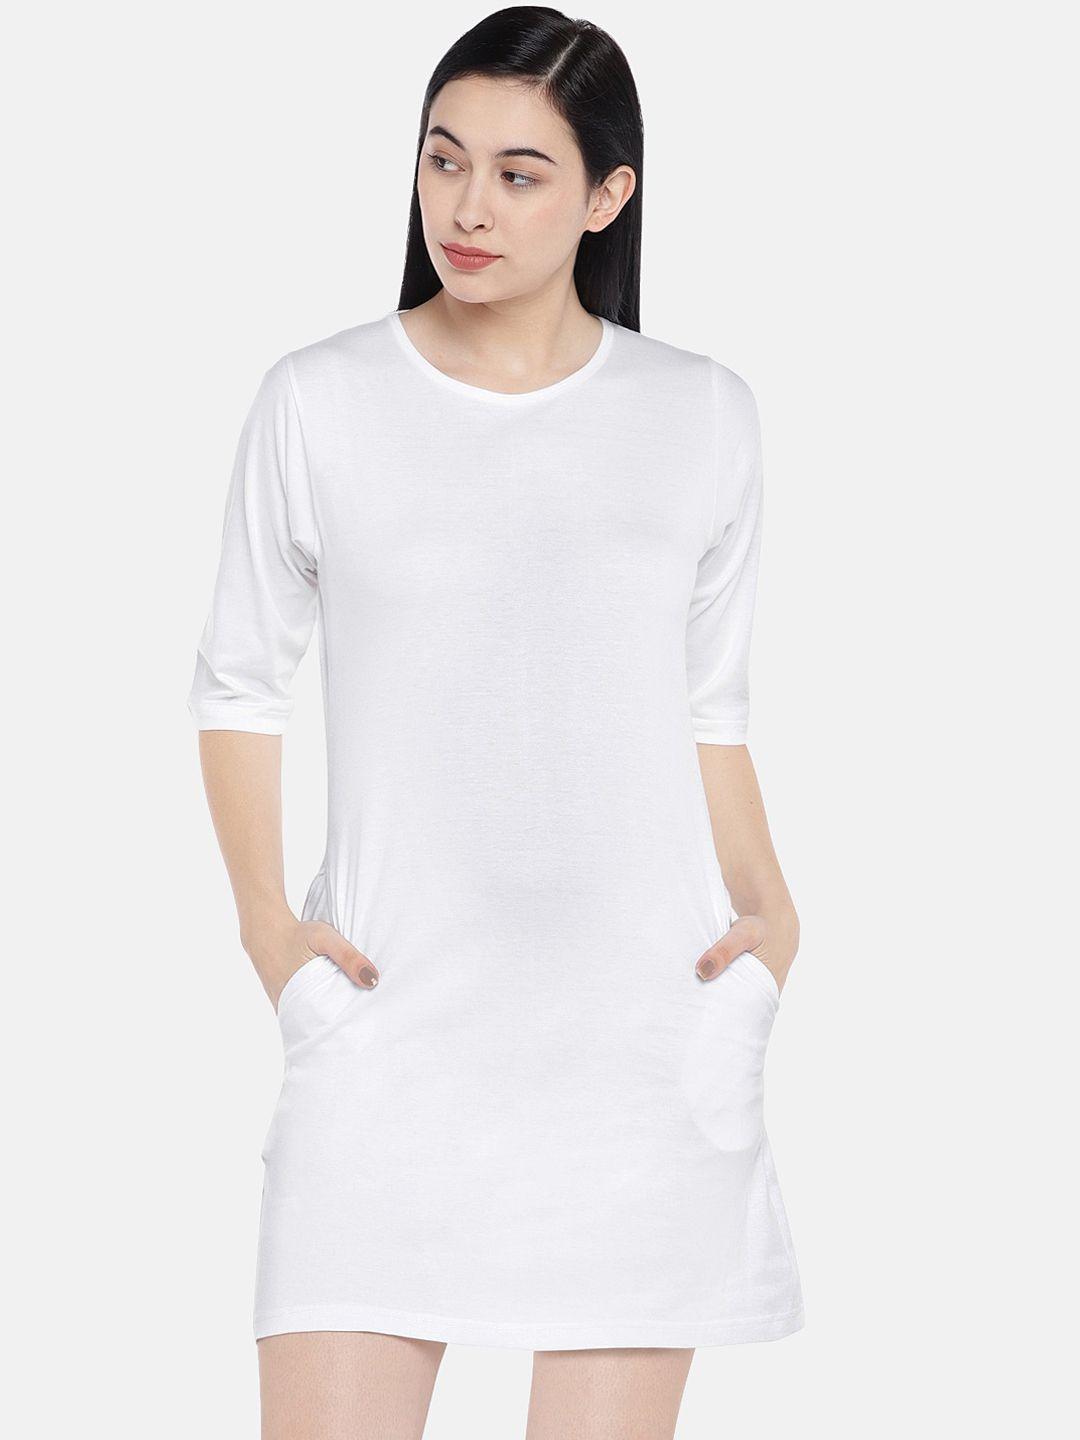 status mantra white t-shirt dress